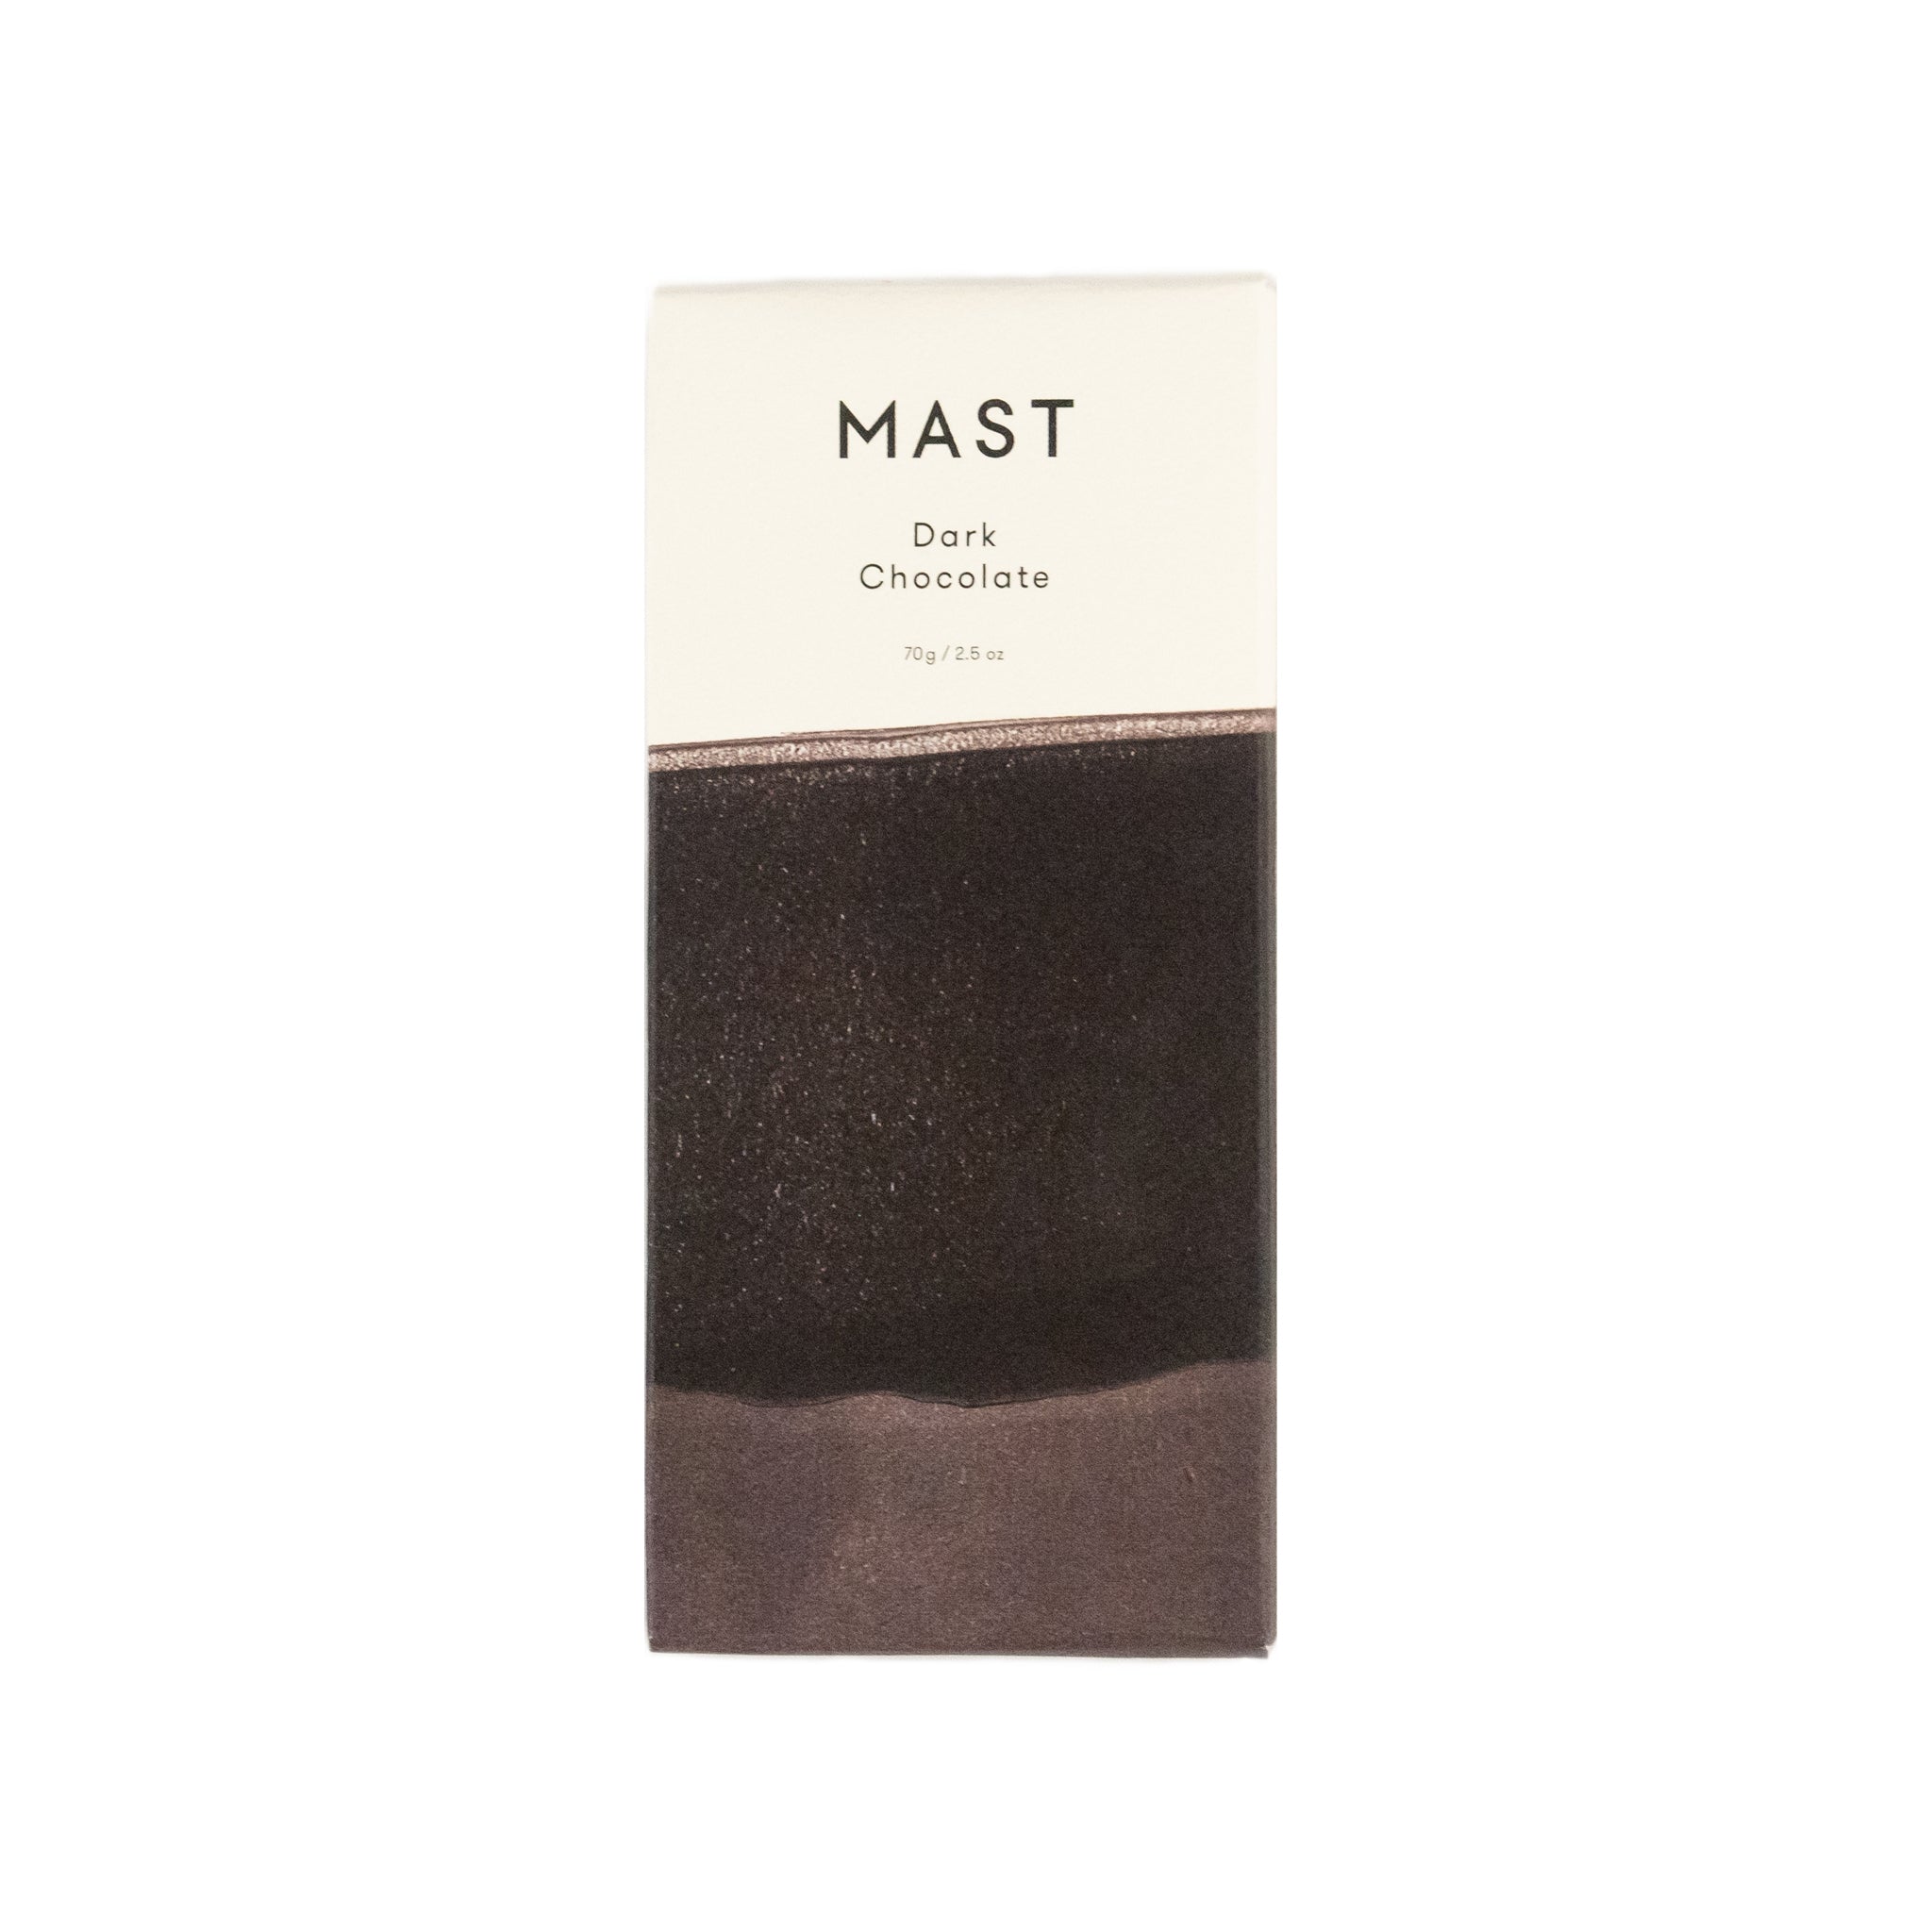 Mast Classic Chocolate Bar